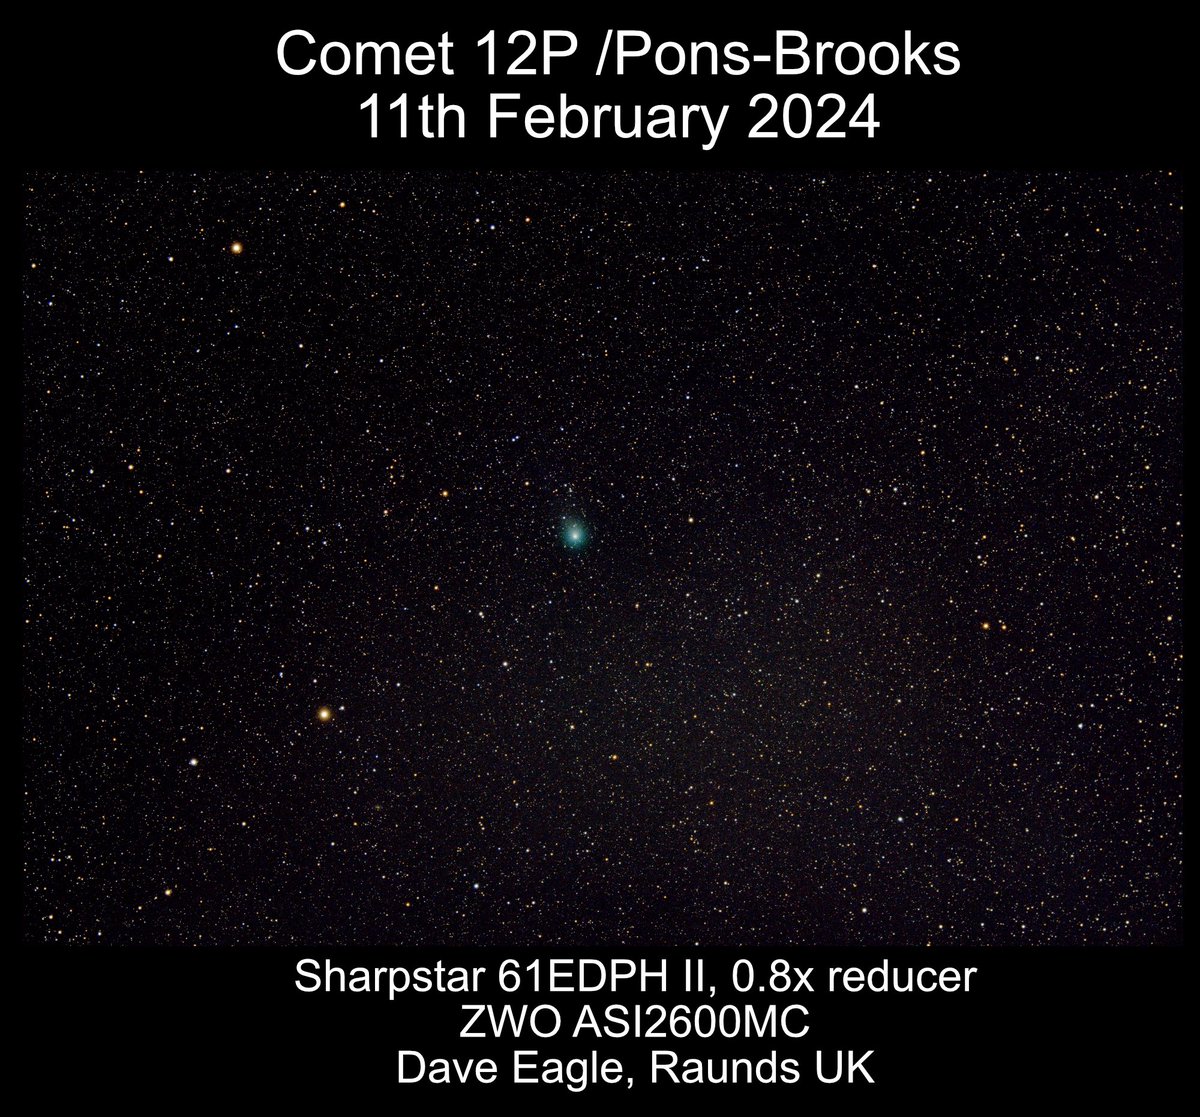 Comet 12P /Pons-Brooks taken last night.